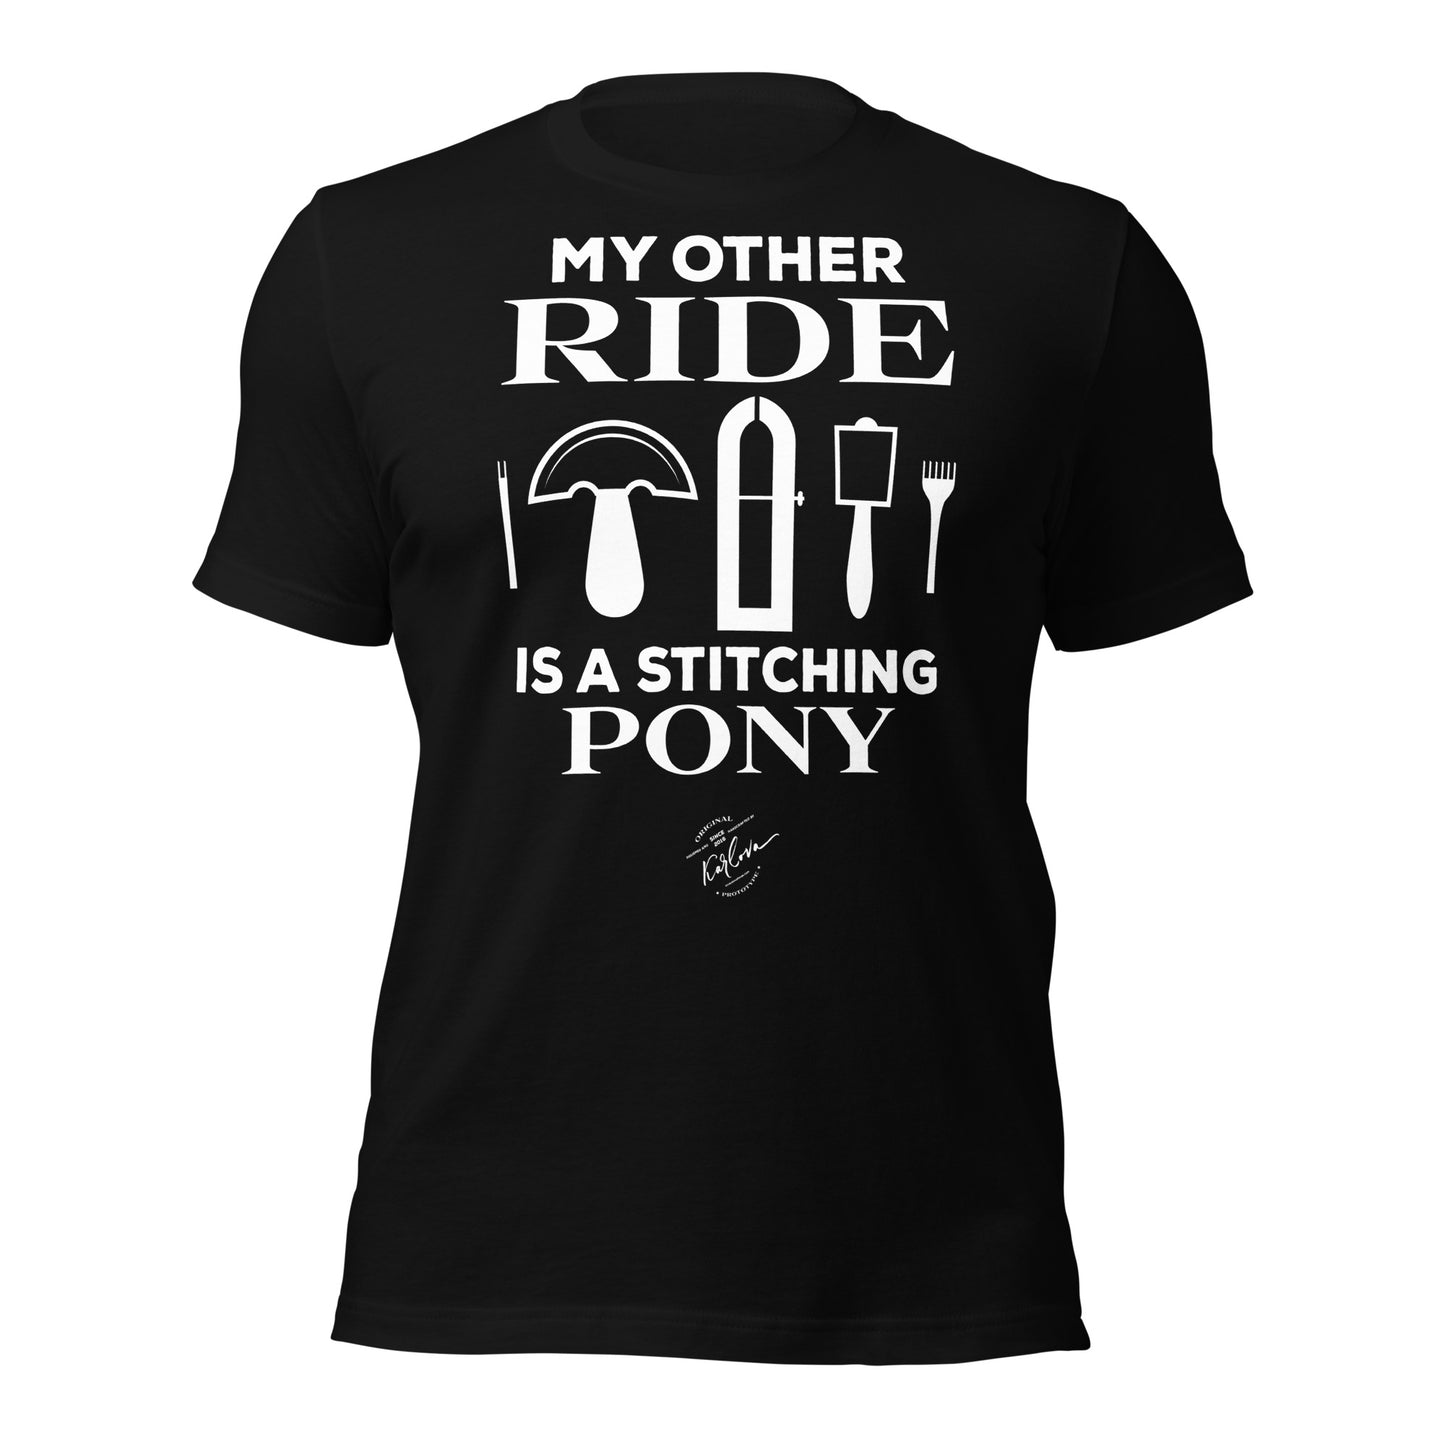 My Other Ride Is a Stitching Pony - Dark